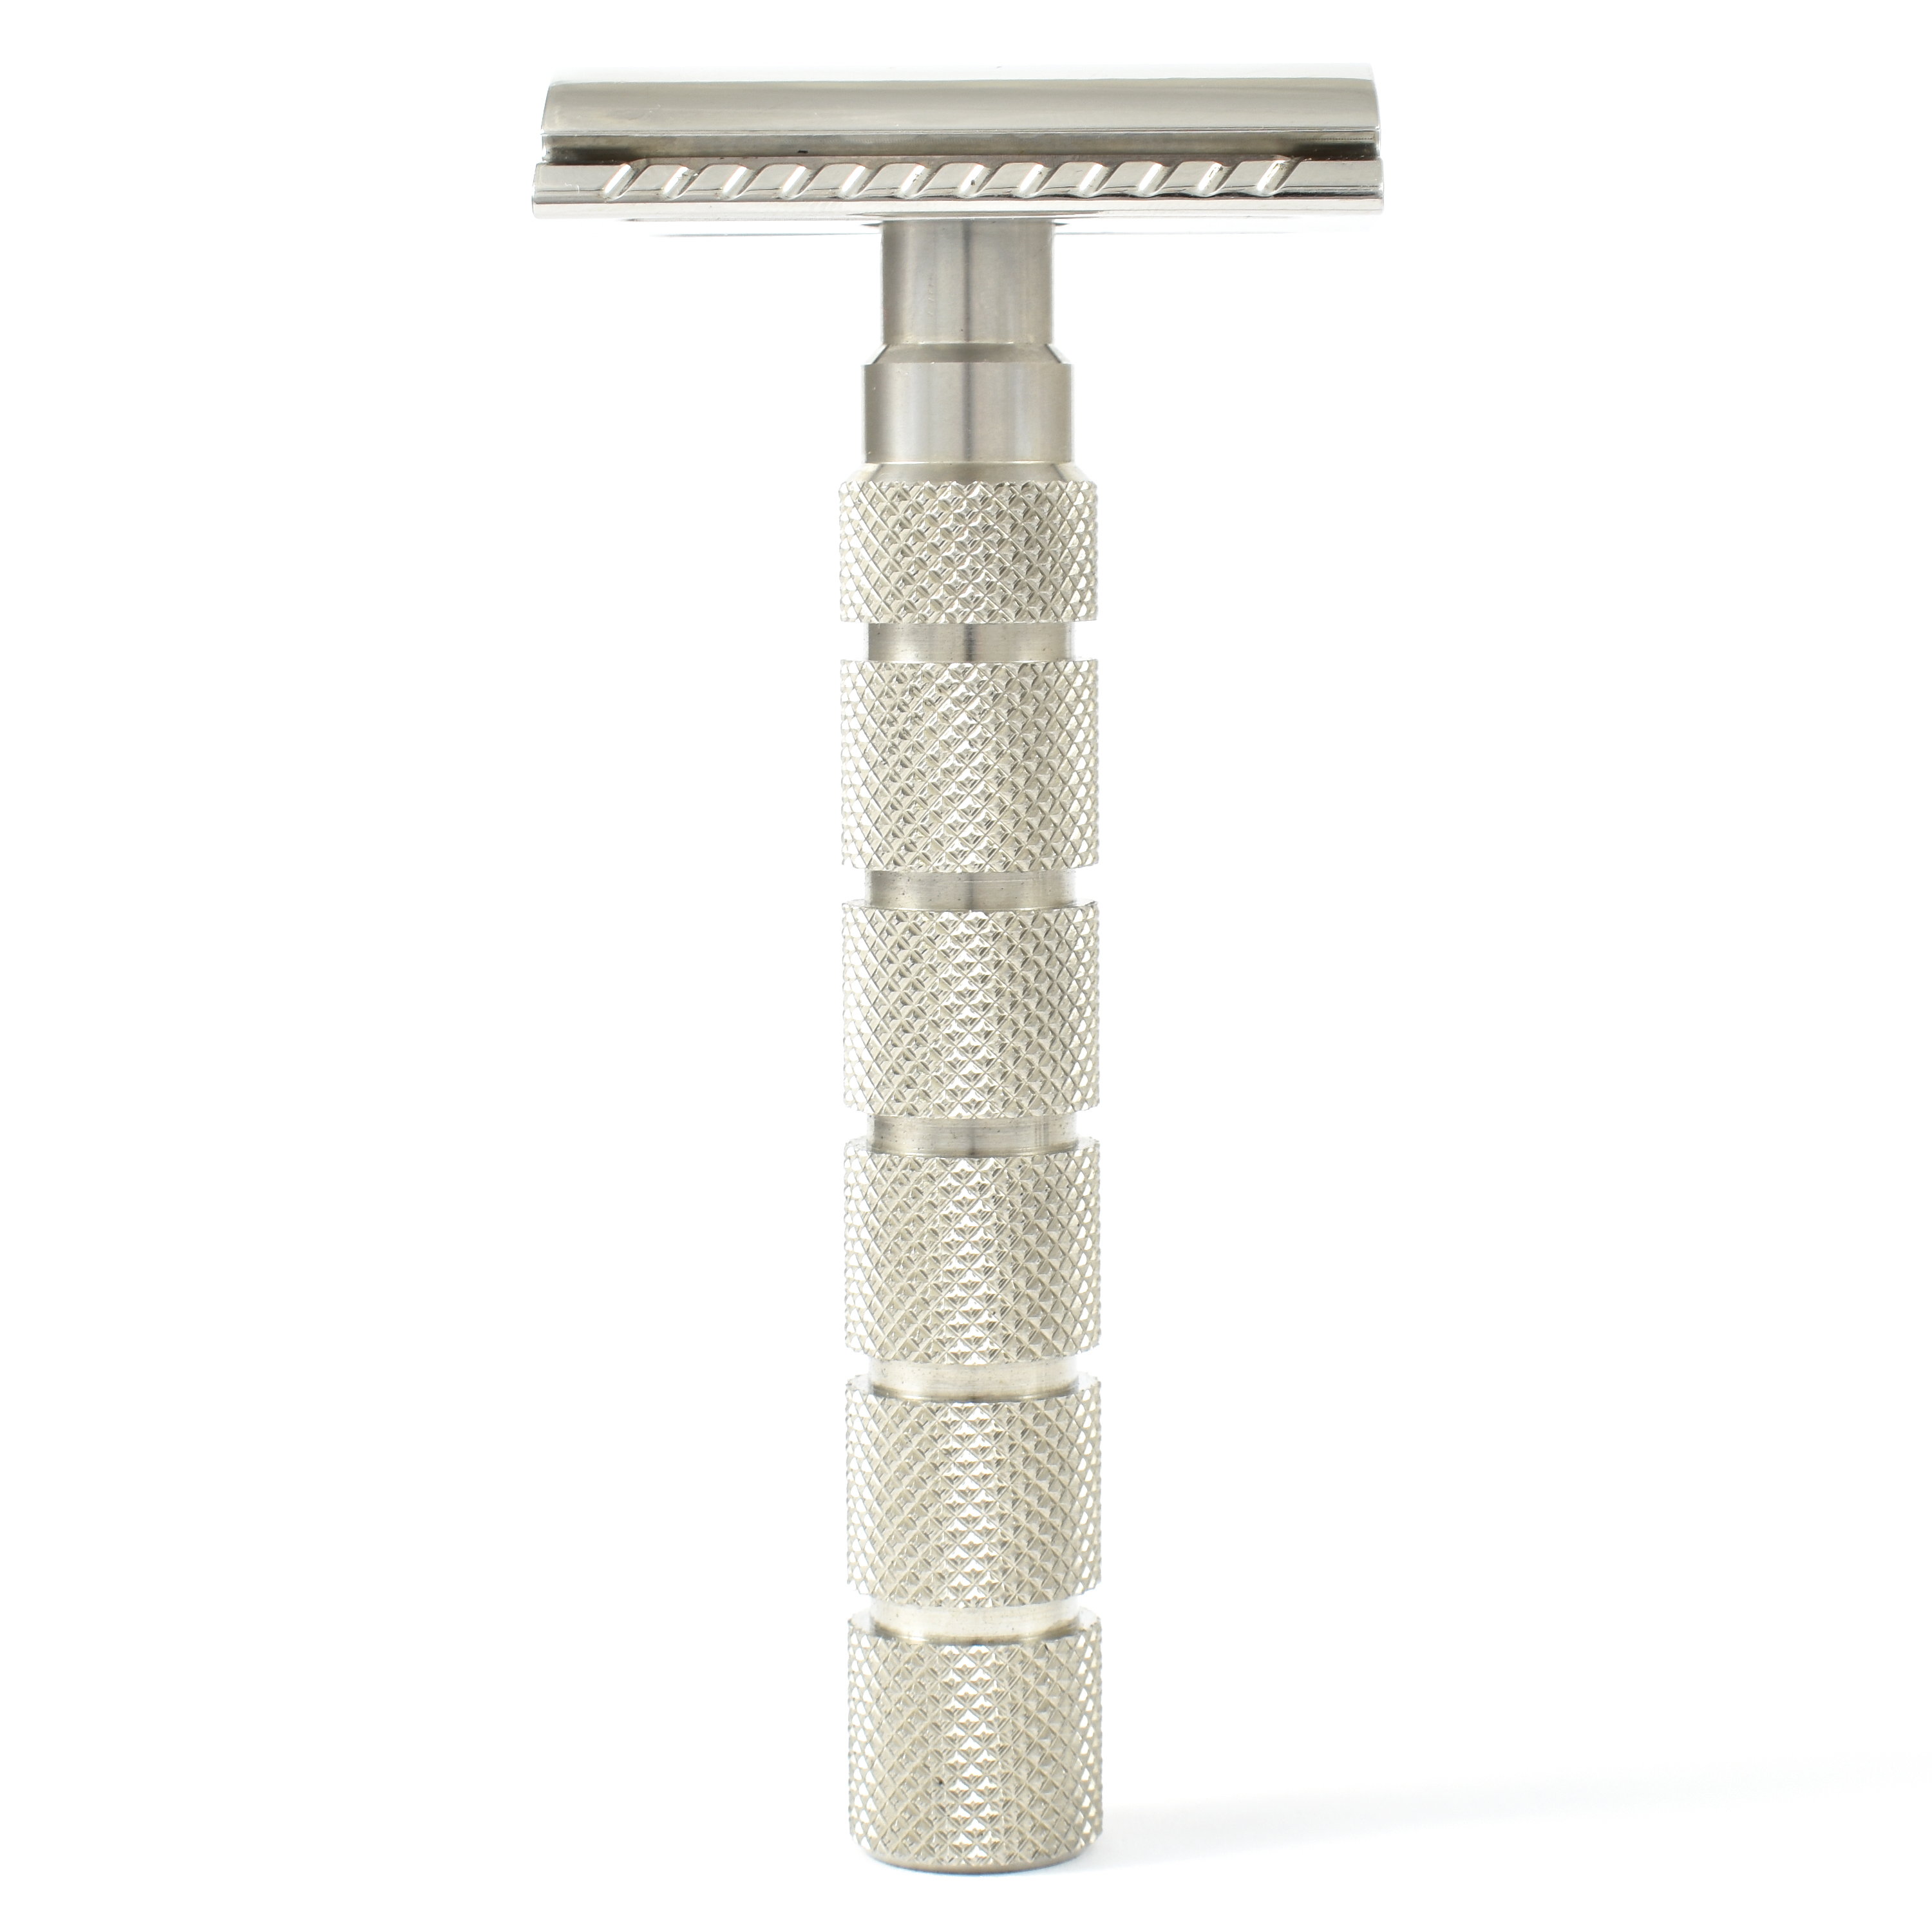 all-stainless-steel-double-edge-safety-razor-execuitve-shaving.JPG